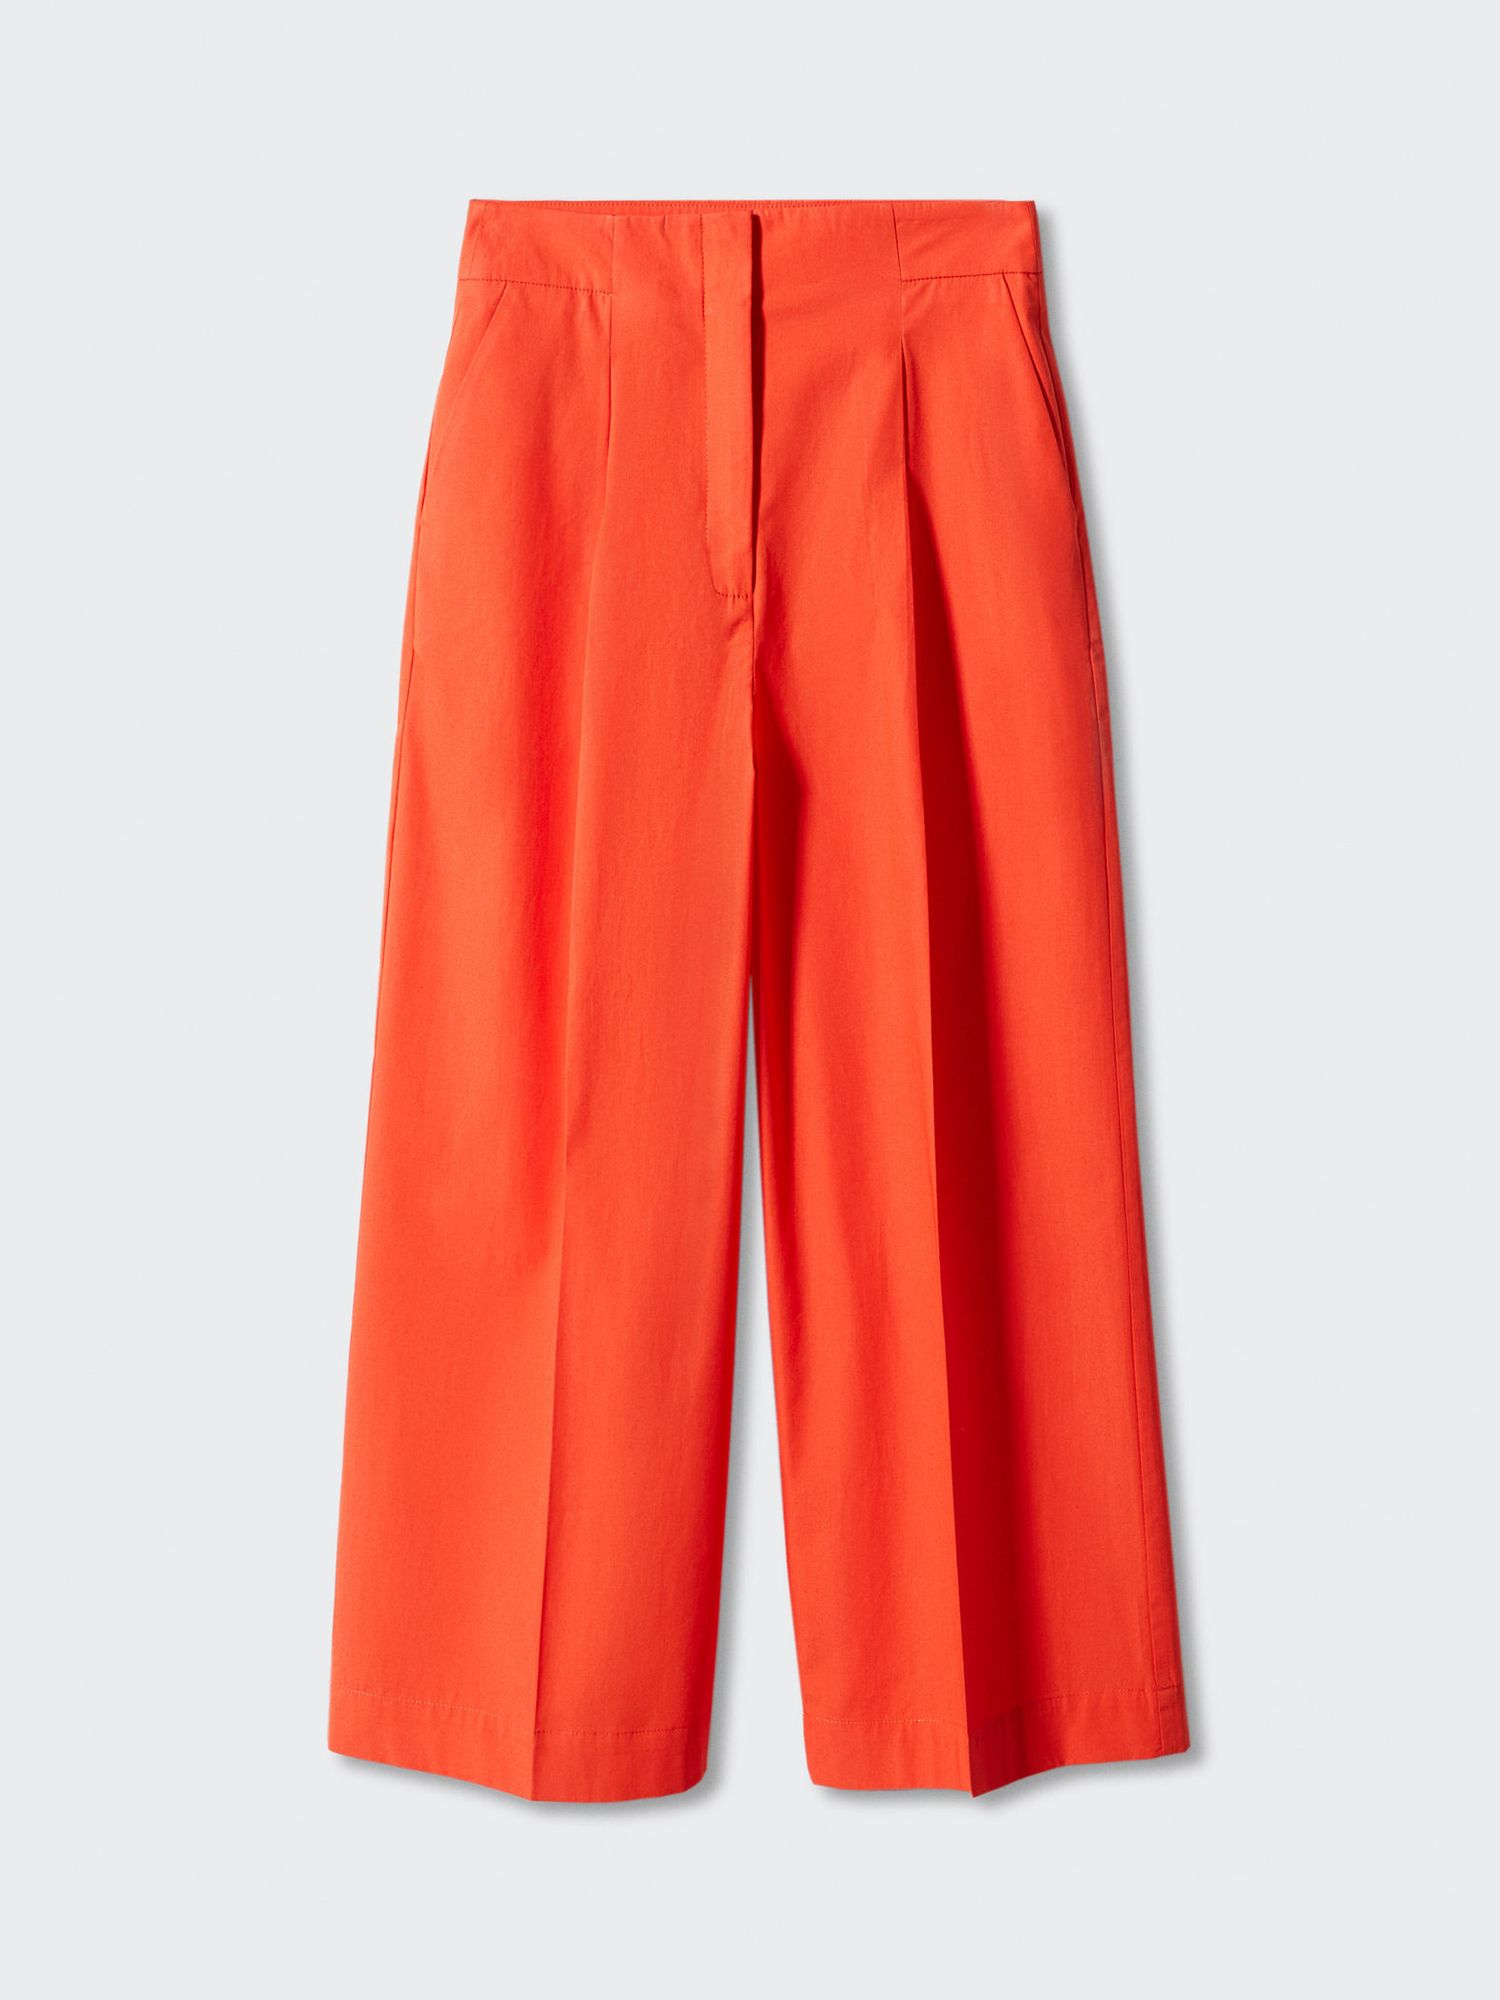 Mango Pope Plain Tailored Trousers, Orange at John Lewis & Partners